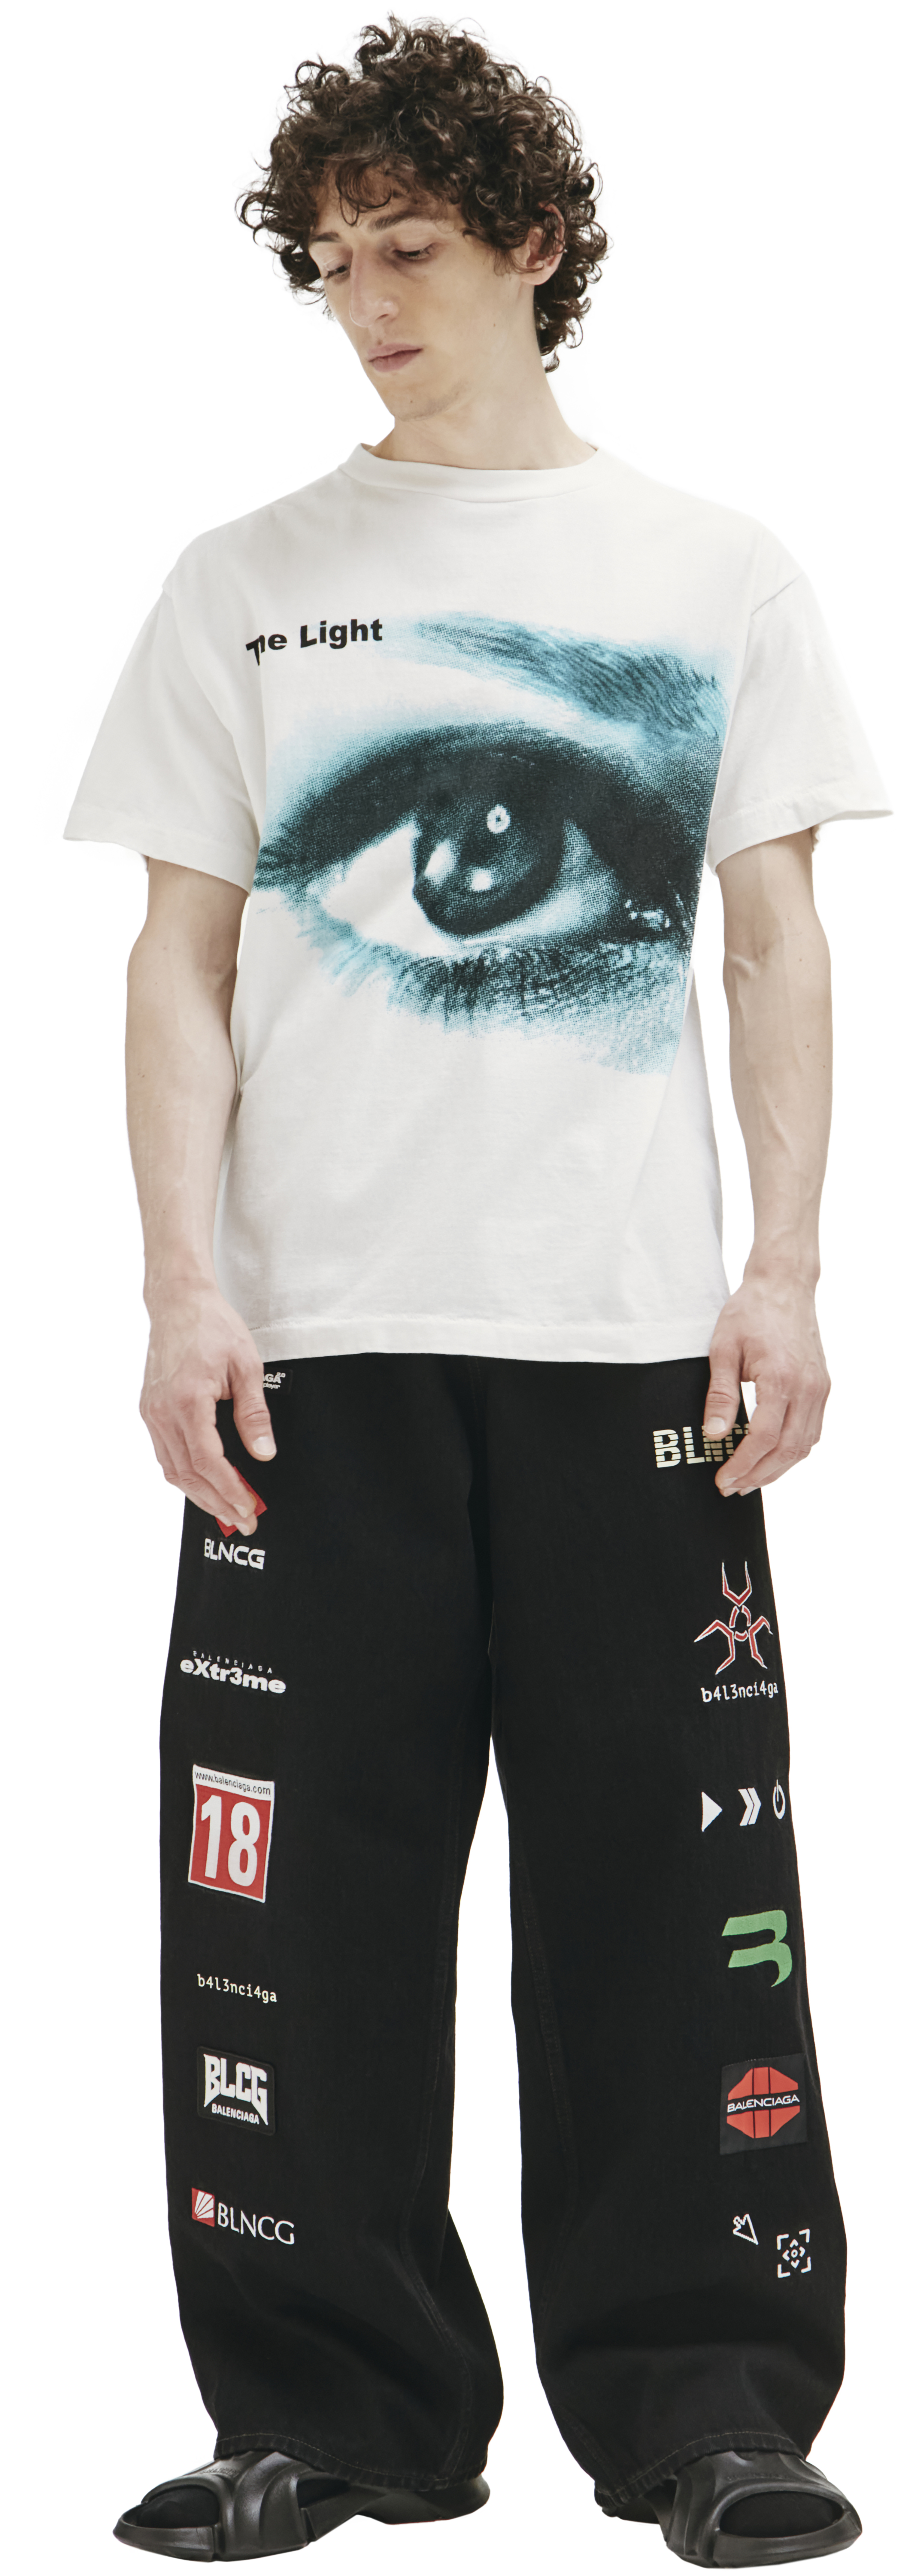 Saint michael the eye t shirt. Made in Japan - ayanawebzine.com